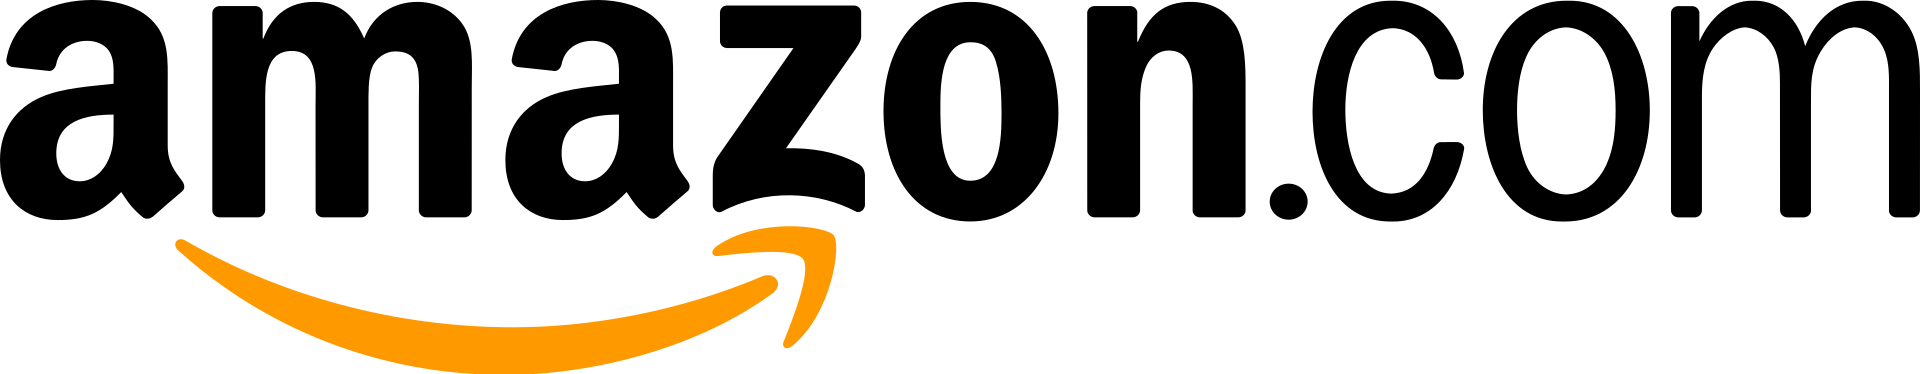 Amazon.com Logo.svg